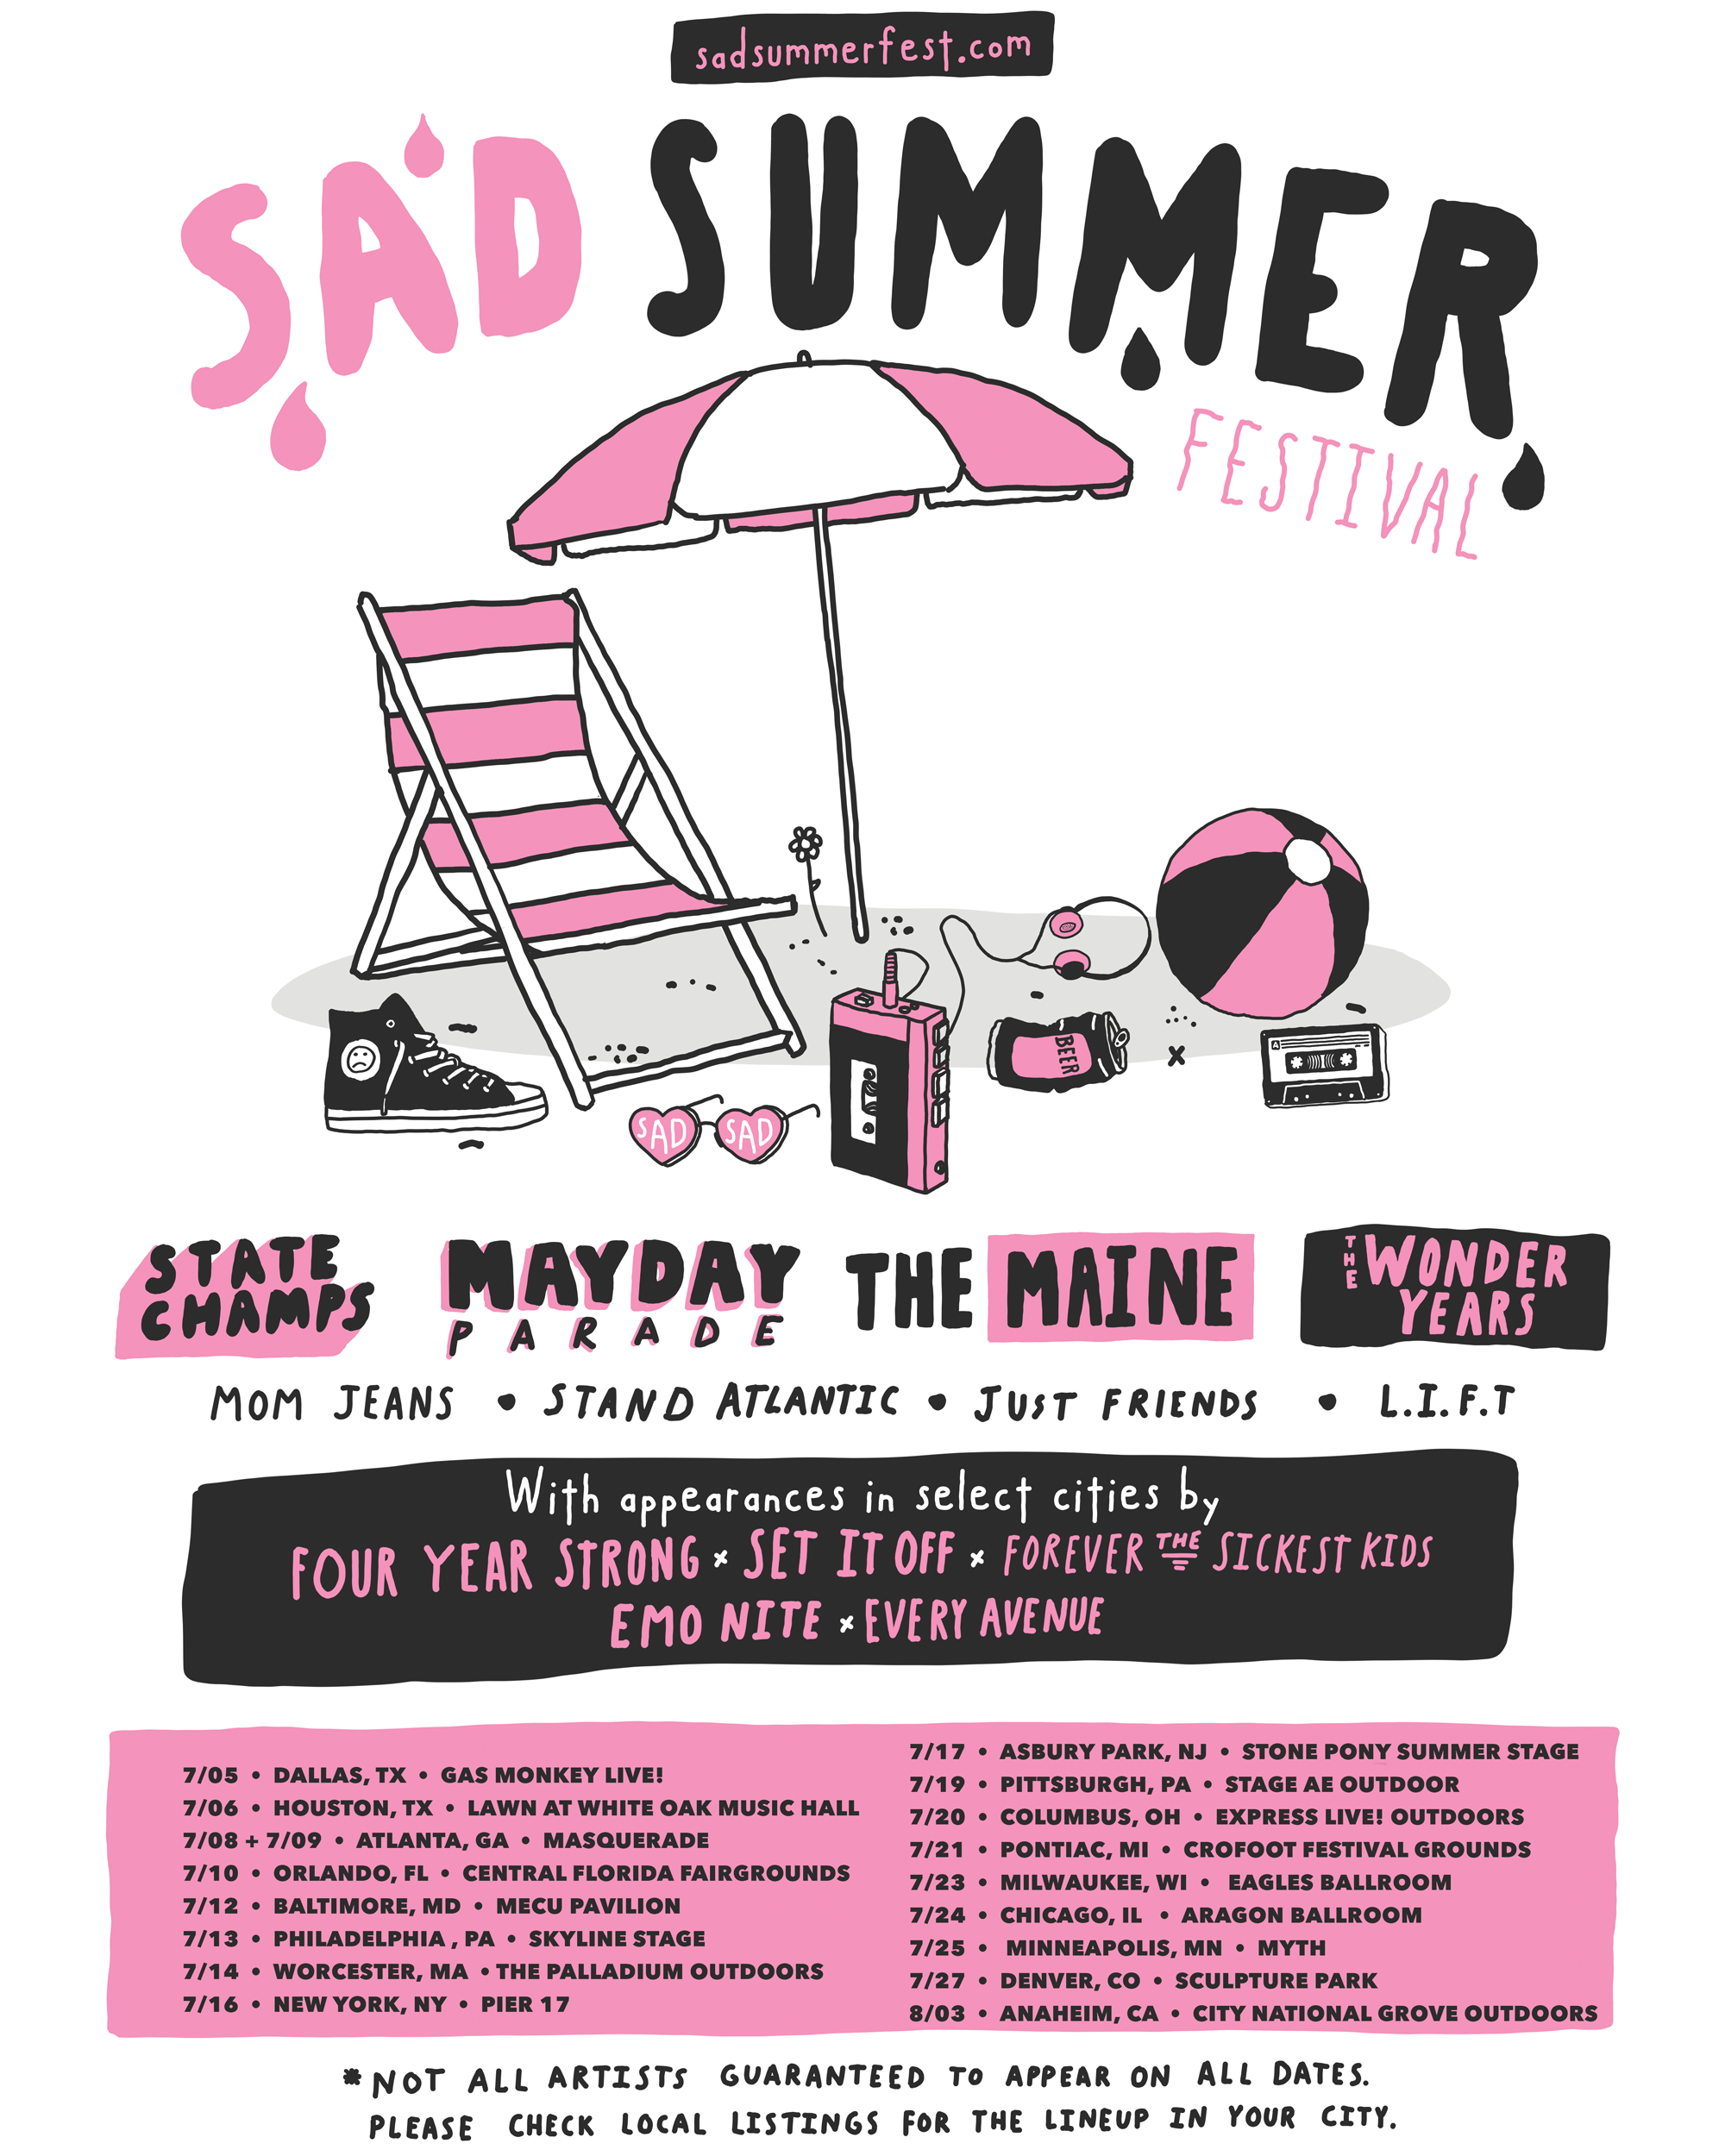 Sad Summer Festival announces 2019 inaugural run featuring Mayday